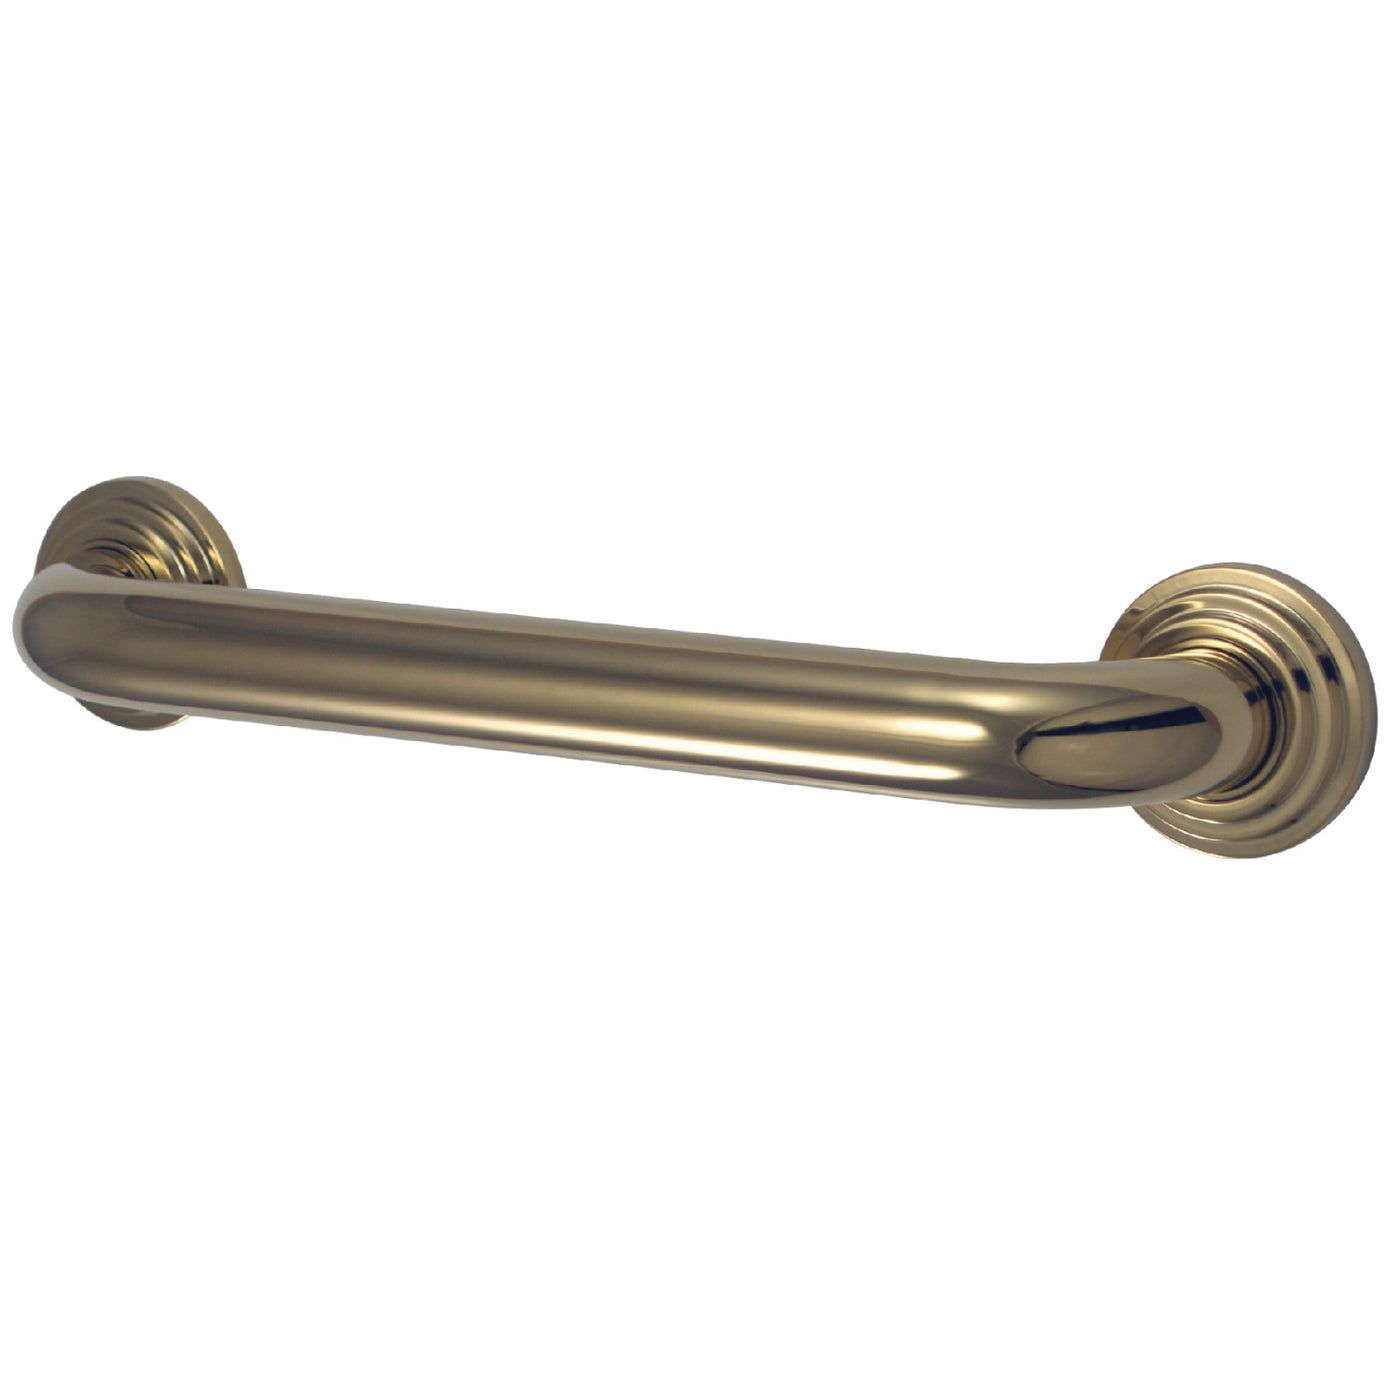 Elements of Design EDR214242 24-Inch X 1-1/4-Inch OD Grab Bar, Polished Brass